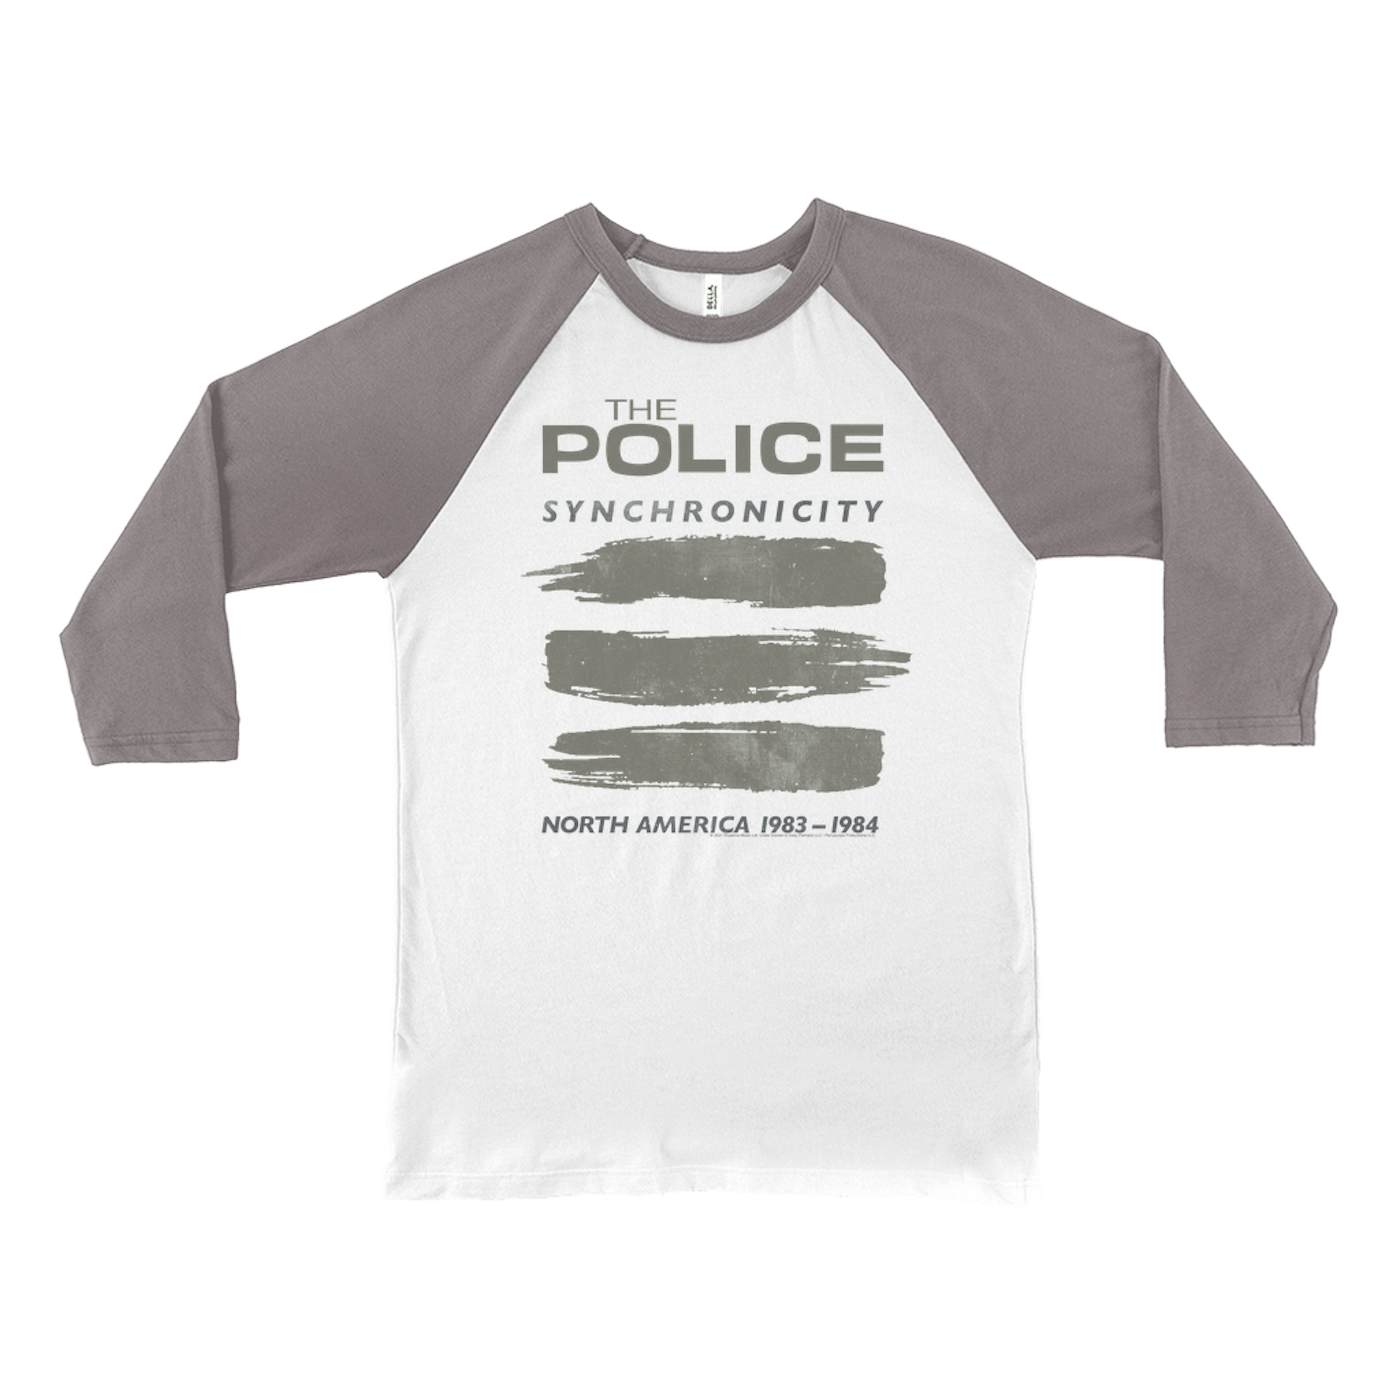 The Police 3/4 Sleeve Baseball Tee | Synchronicity North America Tour 1983 - 1984 The Police Shirt